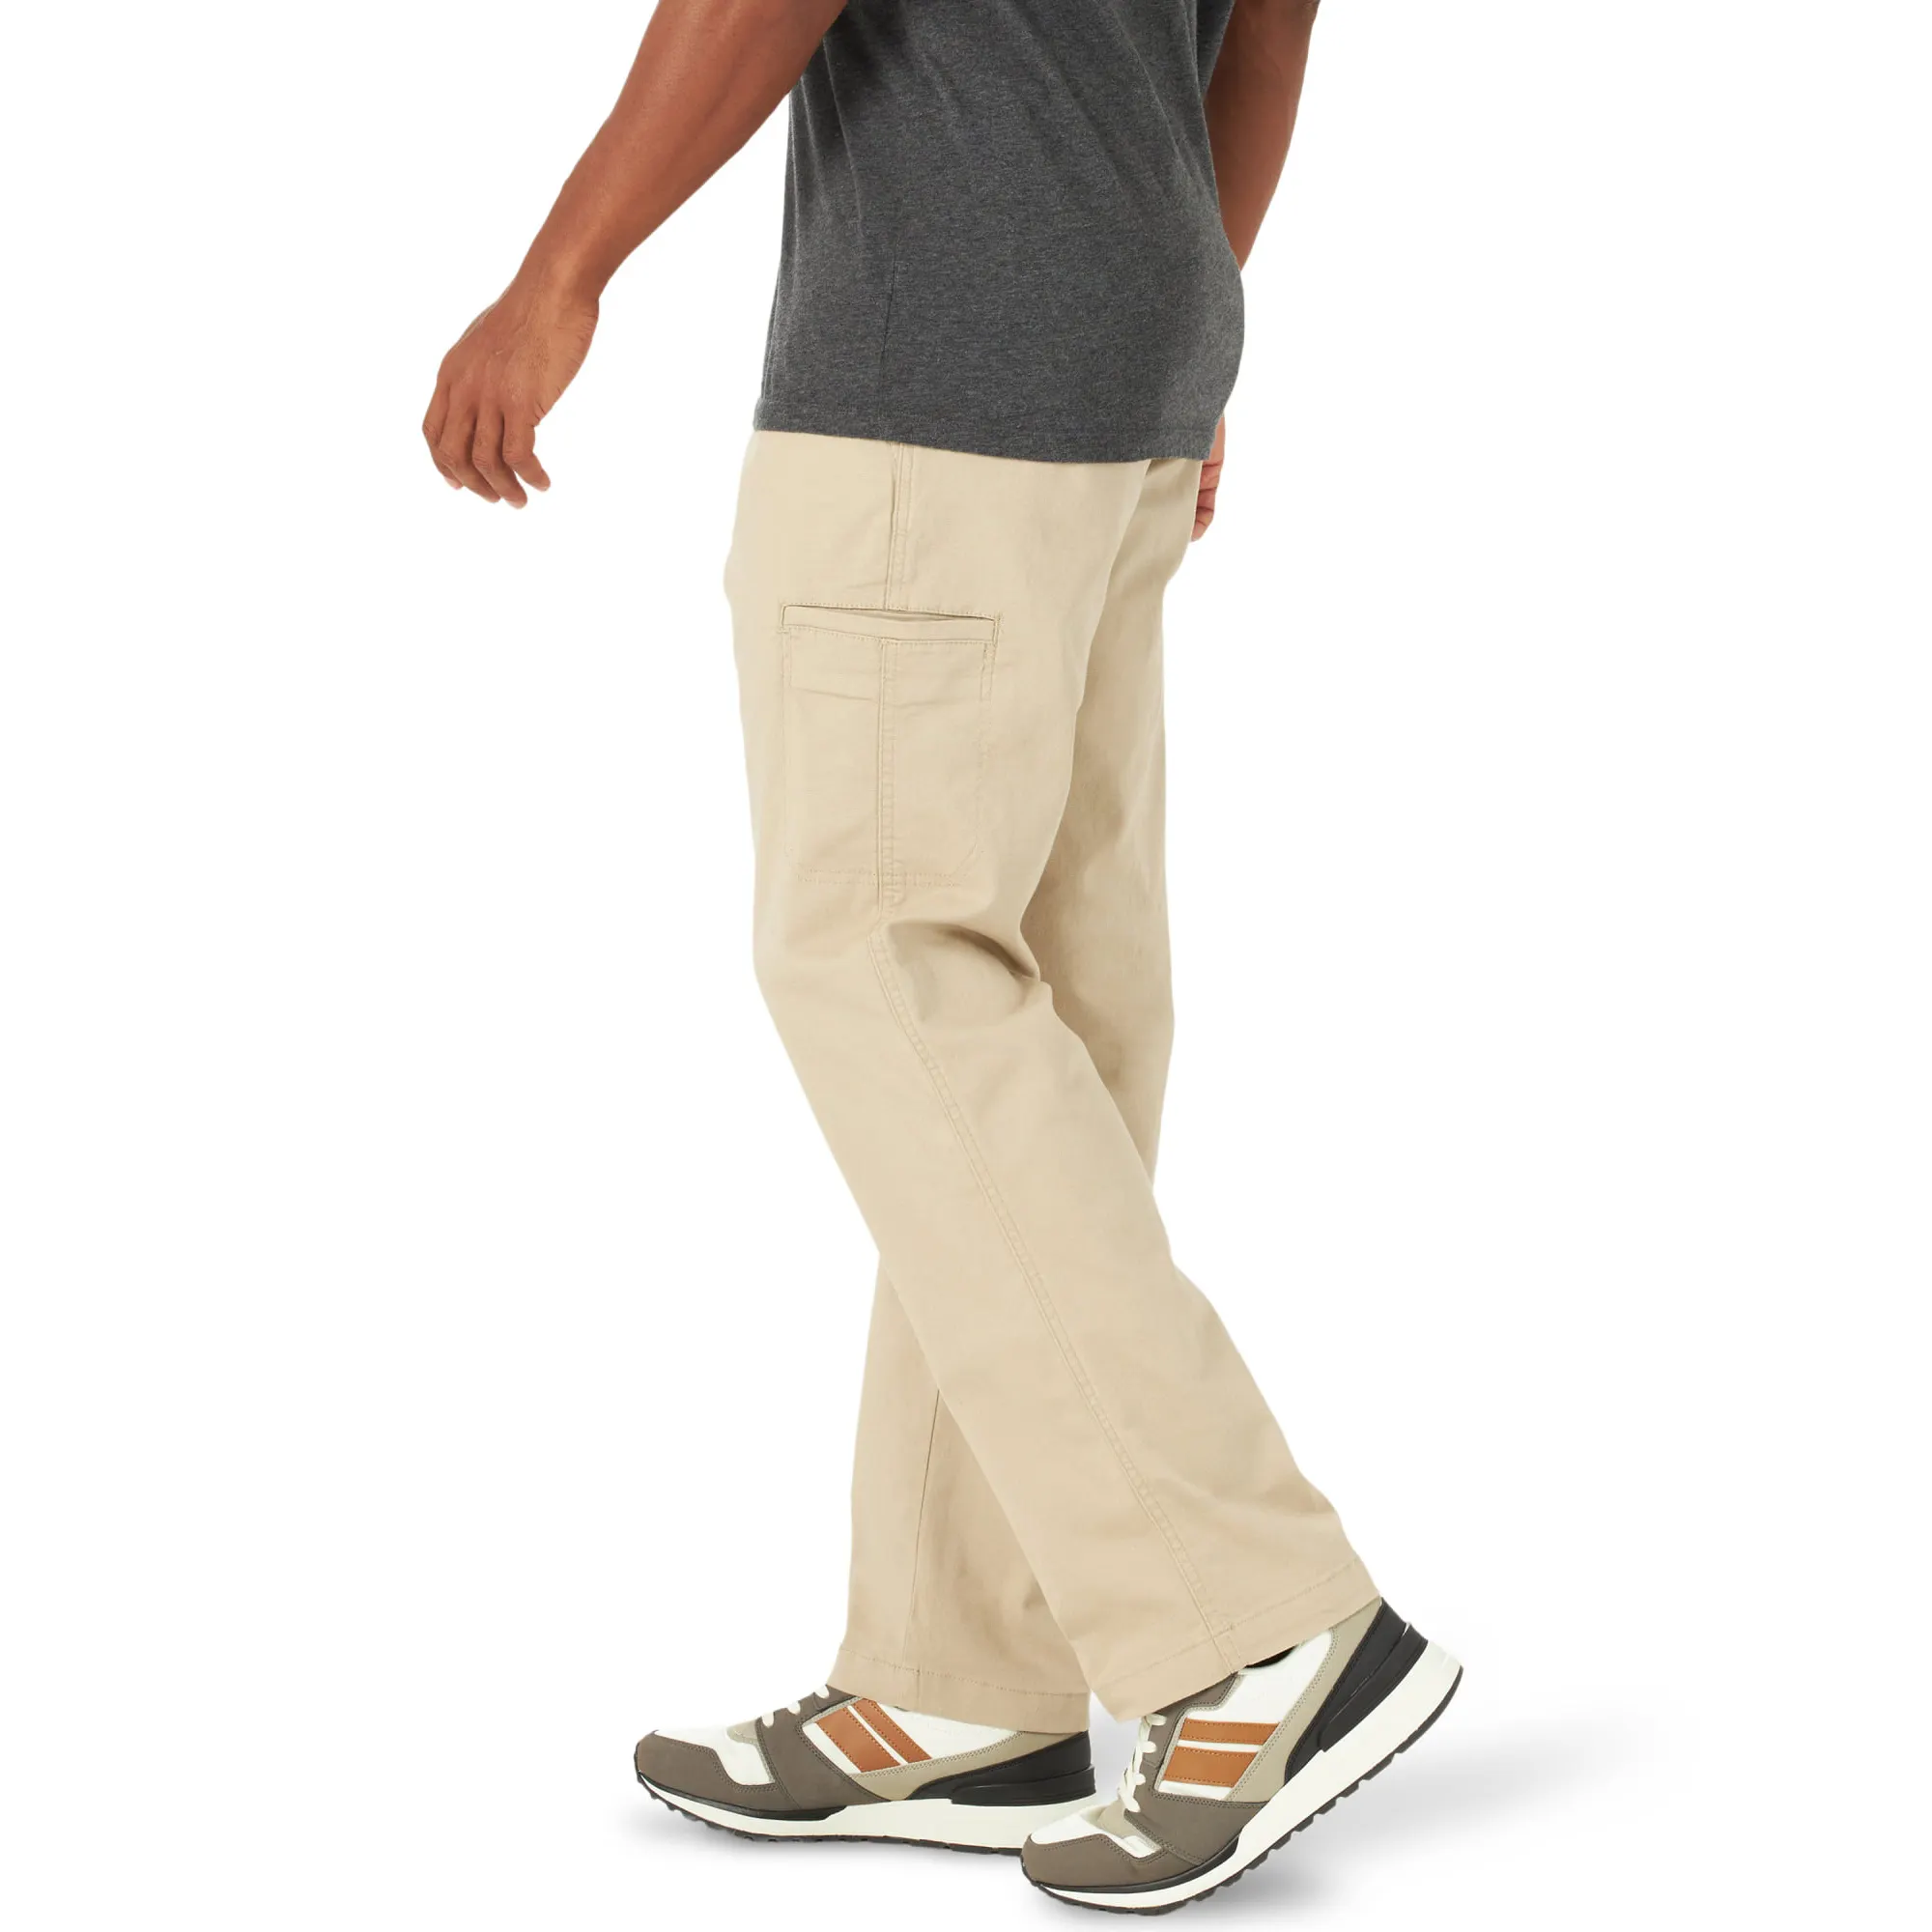 Cargo Pants Men's Trousers Black Outdoor Hiking Pants Sport Leisure Trousers For Men Breathable Men's Pants & Trousers